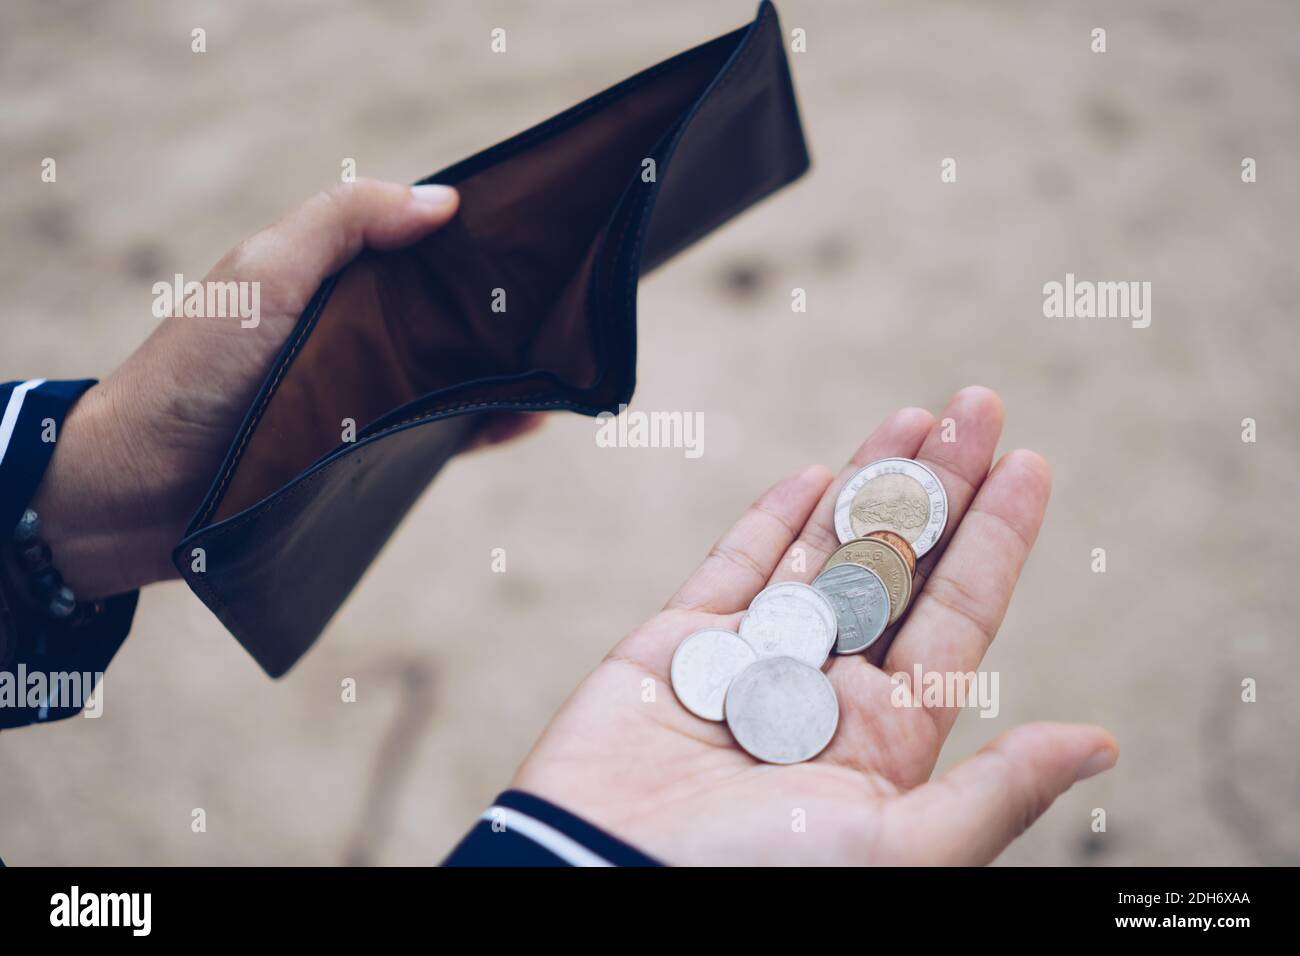 Blue money purse Cut Out Stock Images & Pictures - Alamy